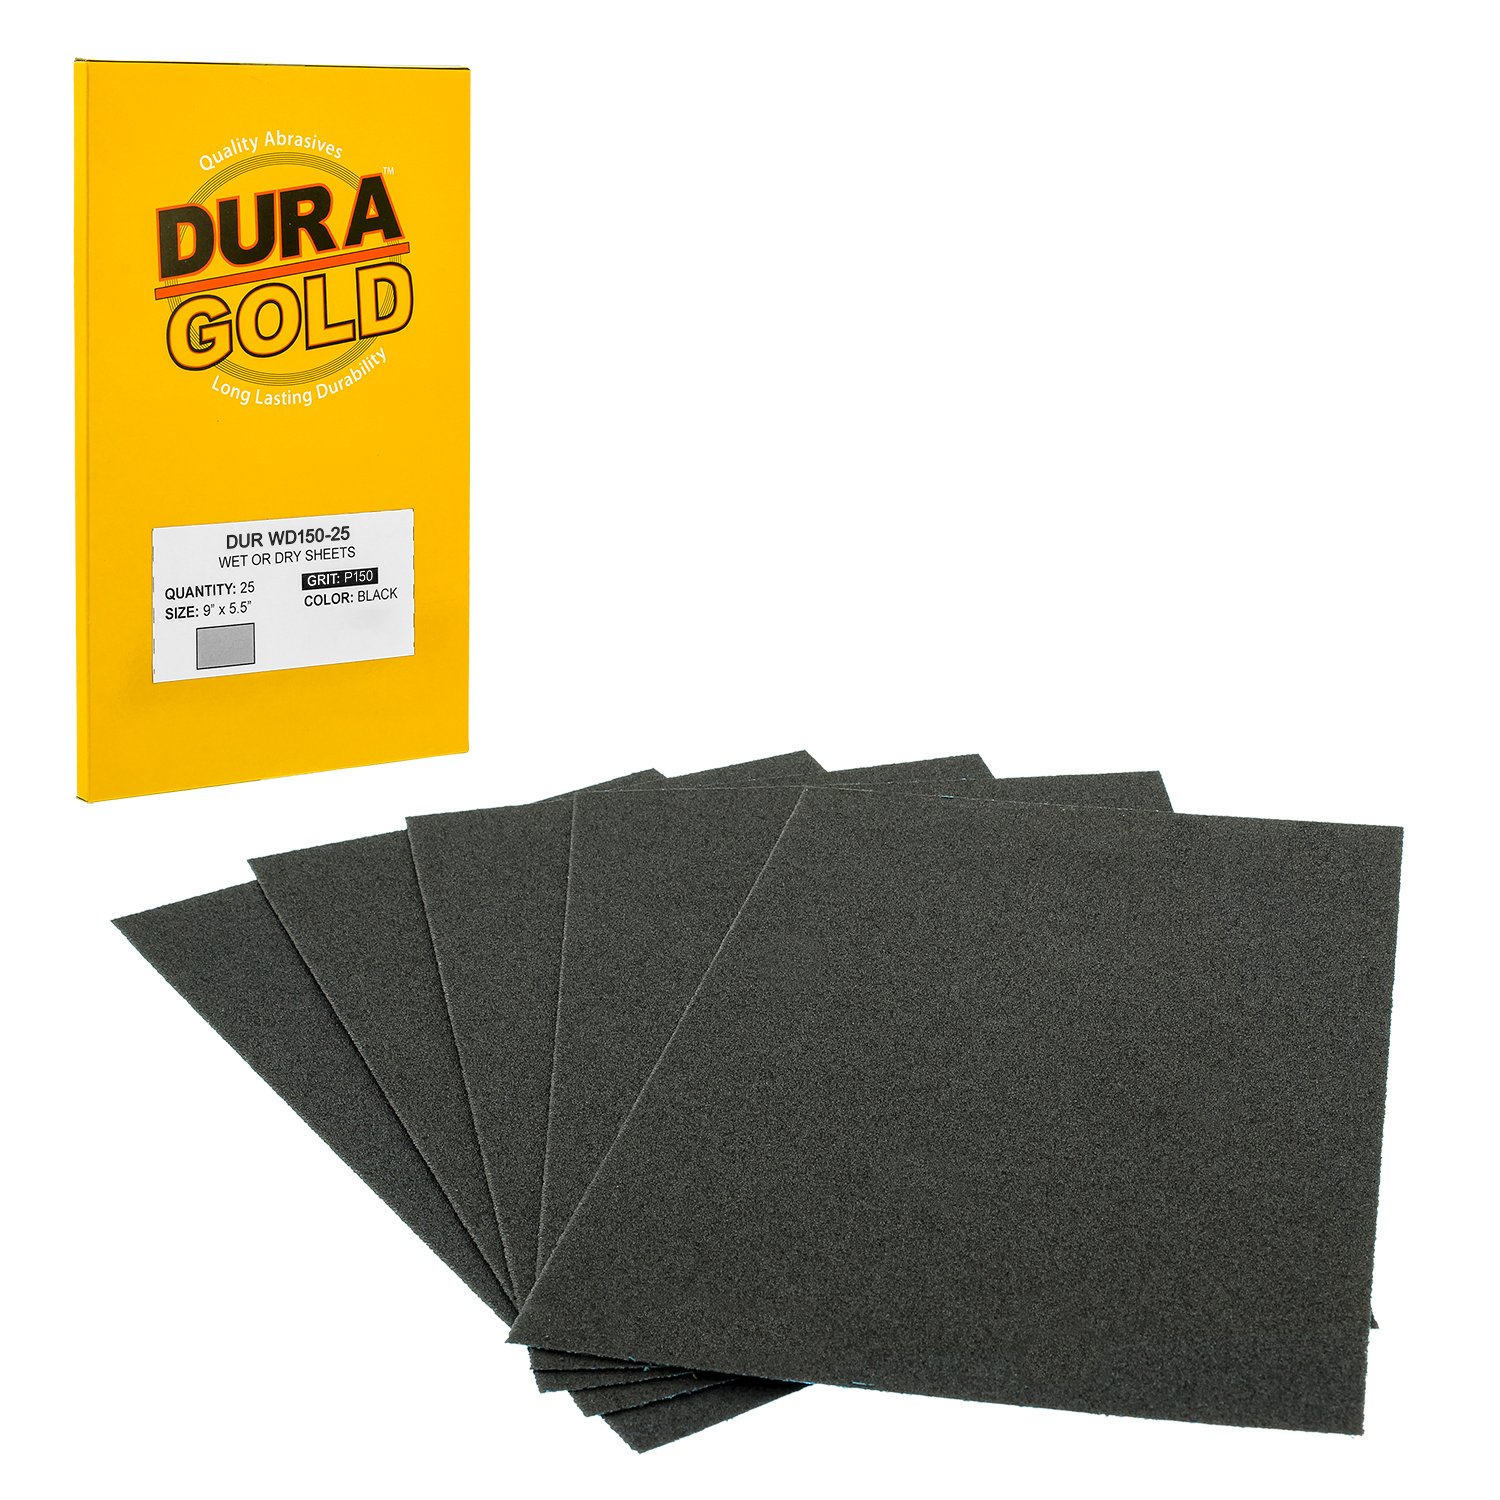 Dura-gold Premium 150 grit Wet or Dry Sandpaper Sheets, 5-12 x 9, Box of 25 - coarse-cut Sanding, Detailing, Polishing Automotiv